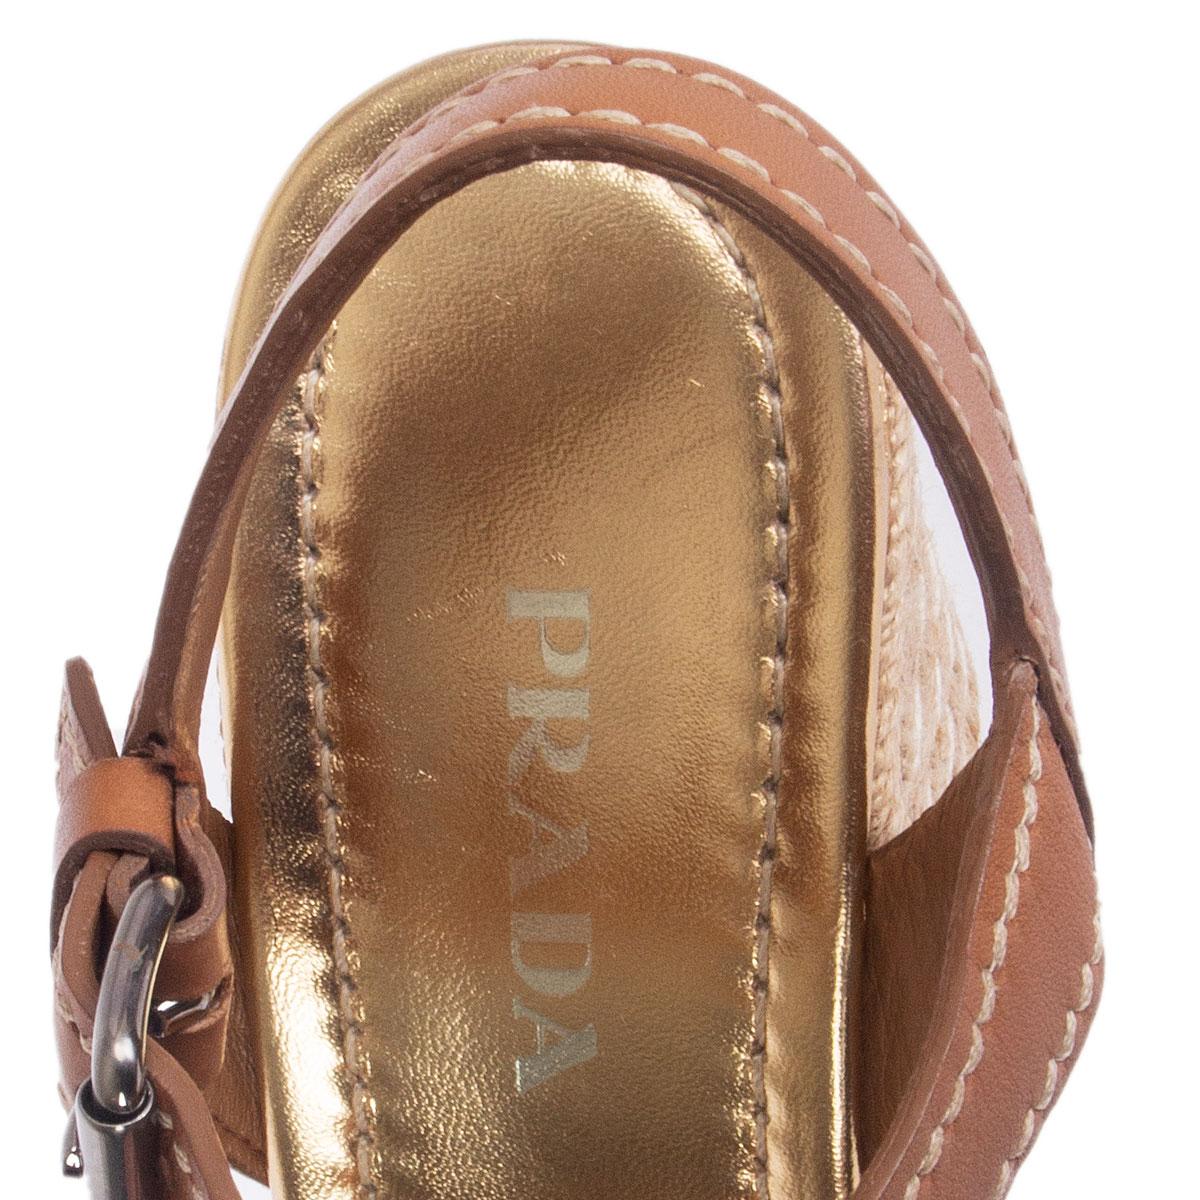 Beige PRADA metallic gold & brown leather Wedge Espadrille Sandals Shoes 40